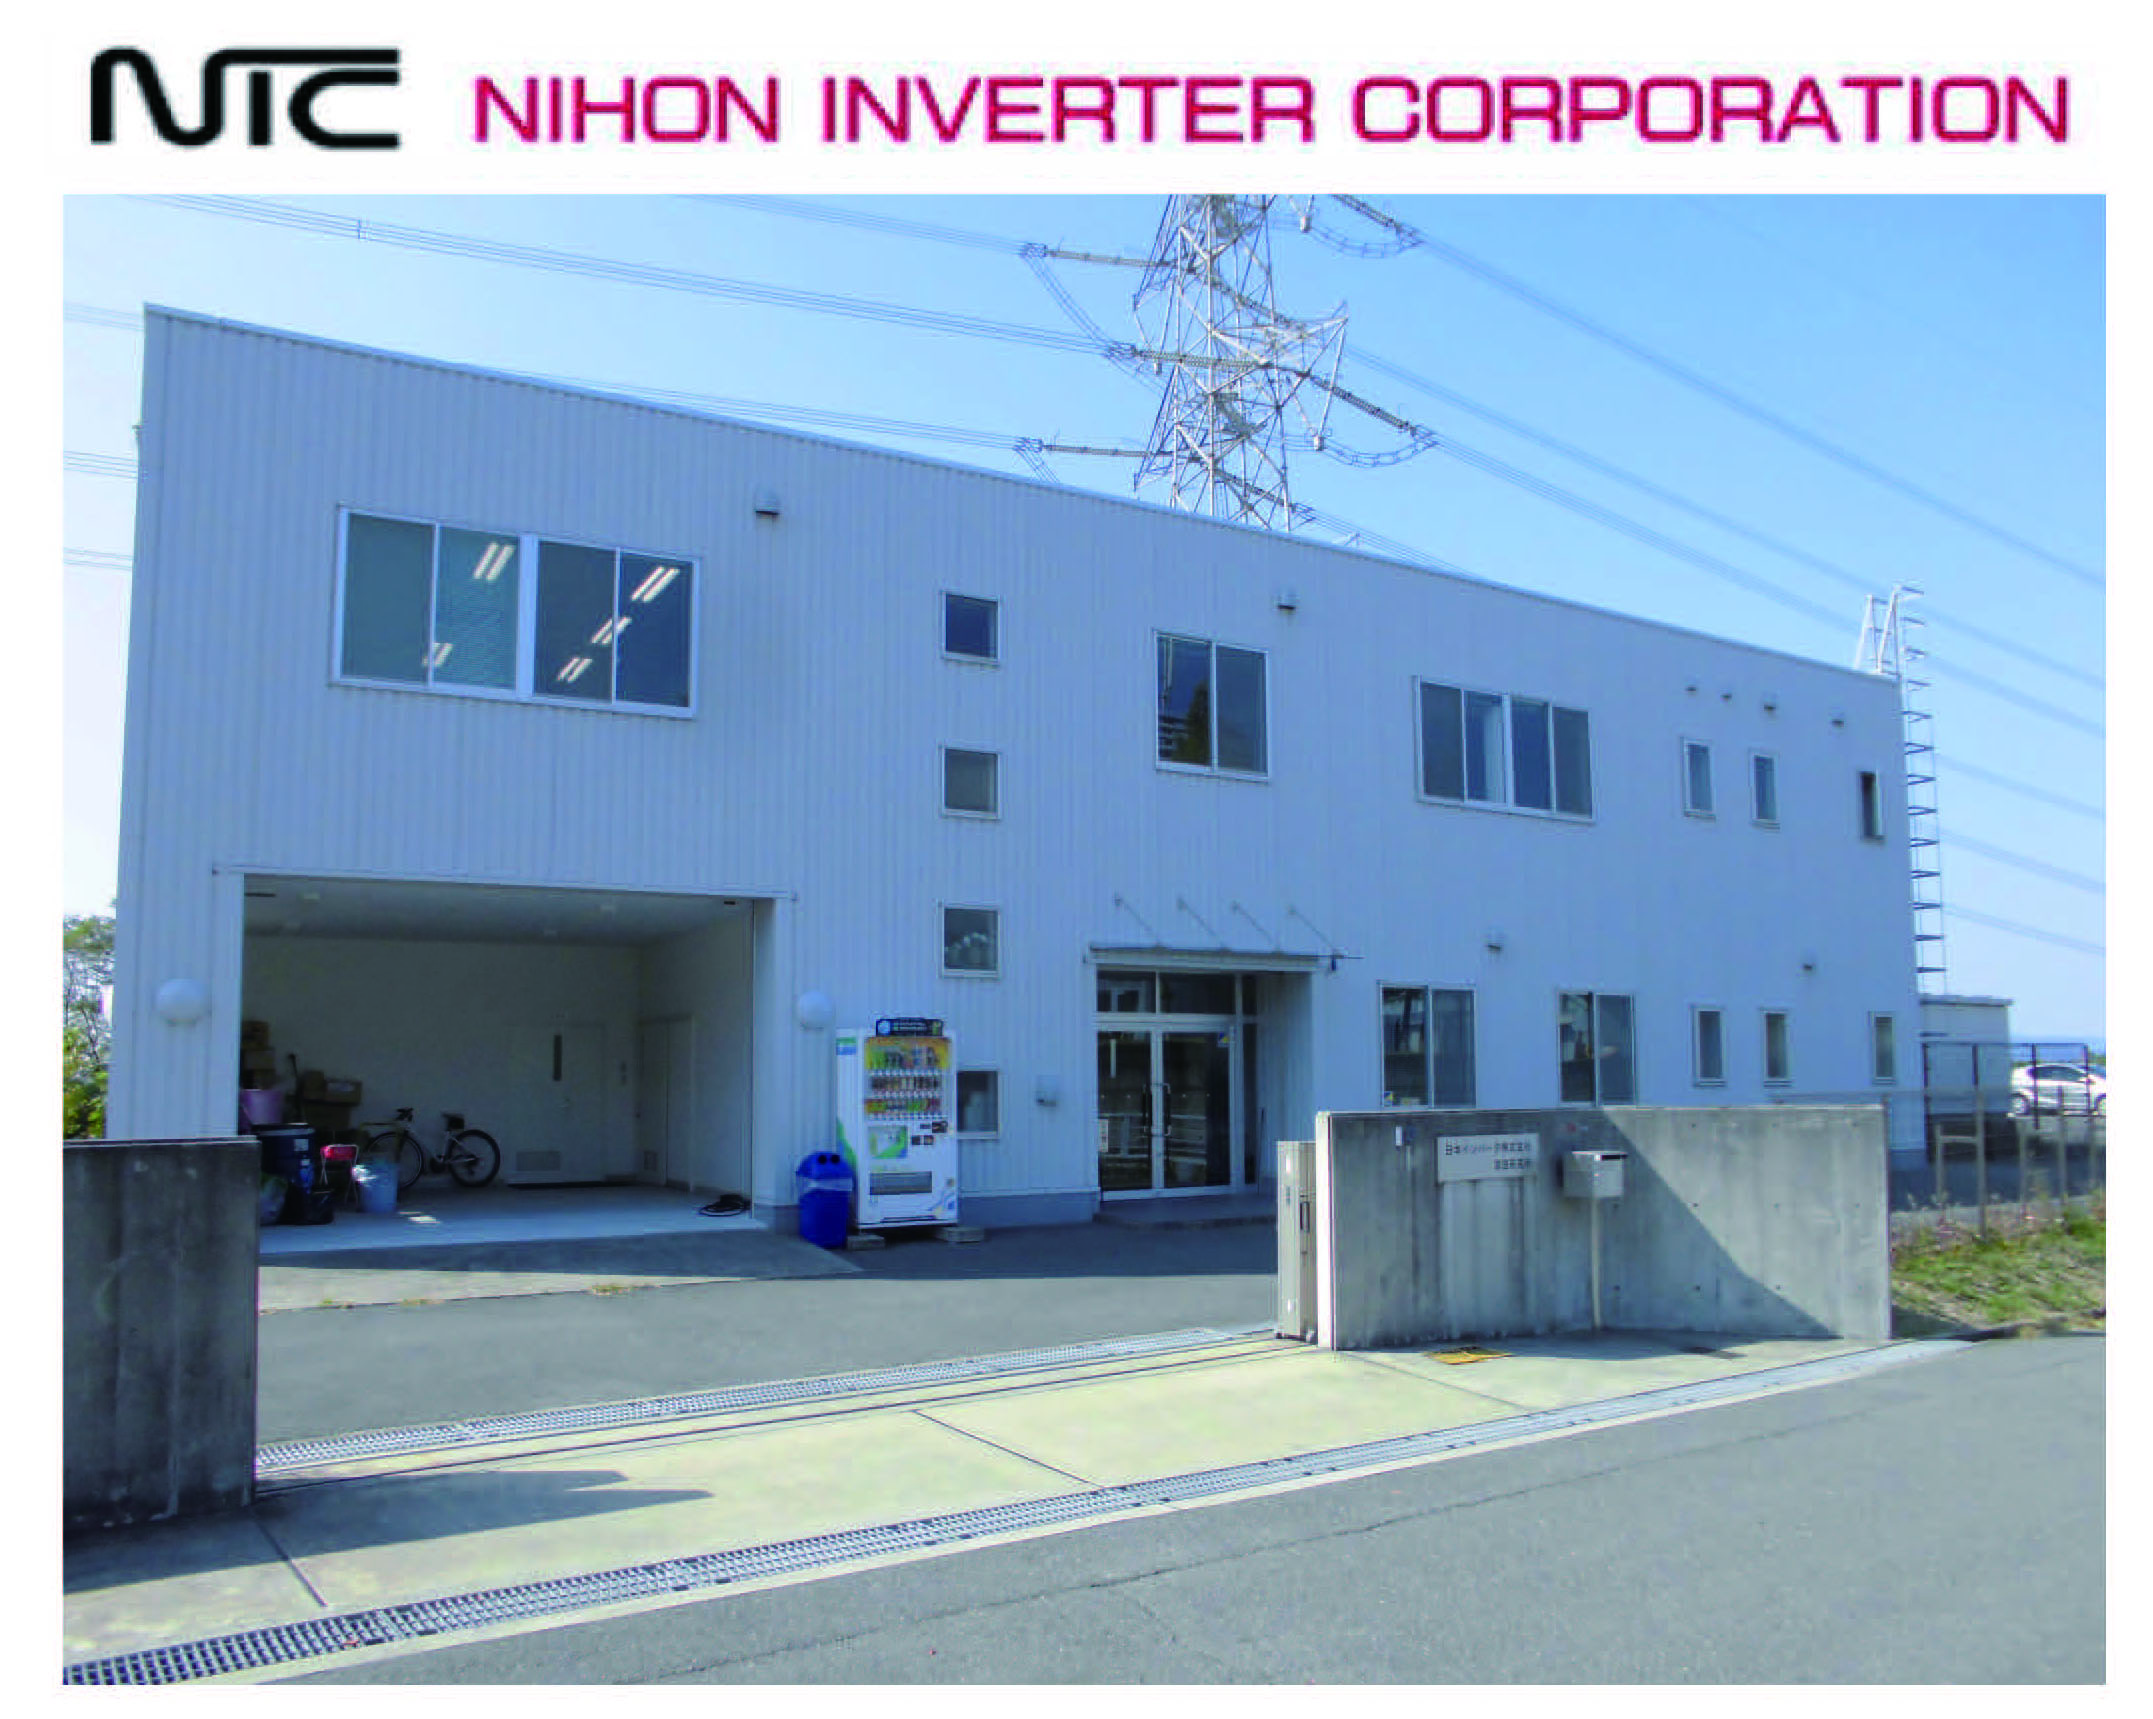 Nihon Inverter Corporation since 1980